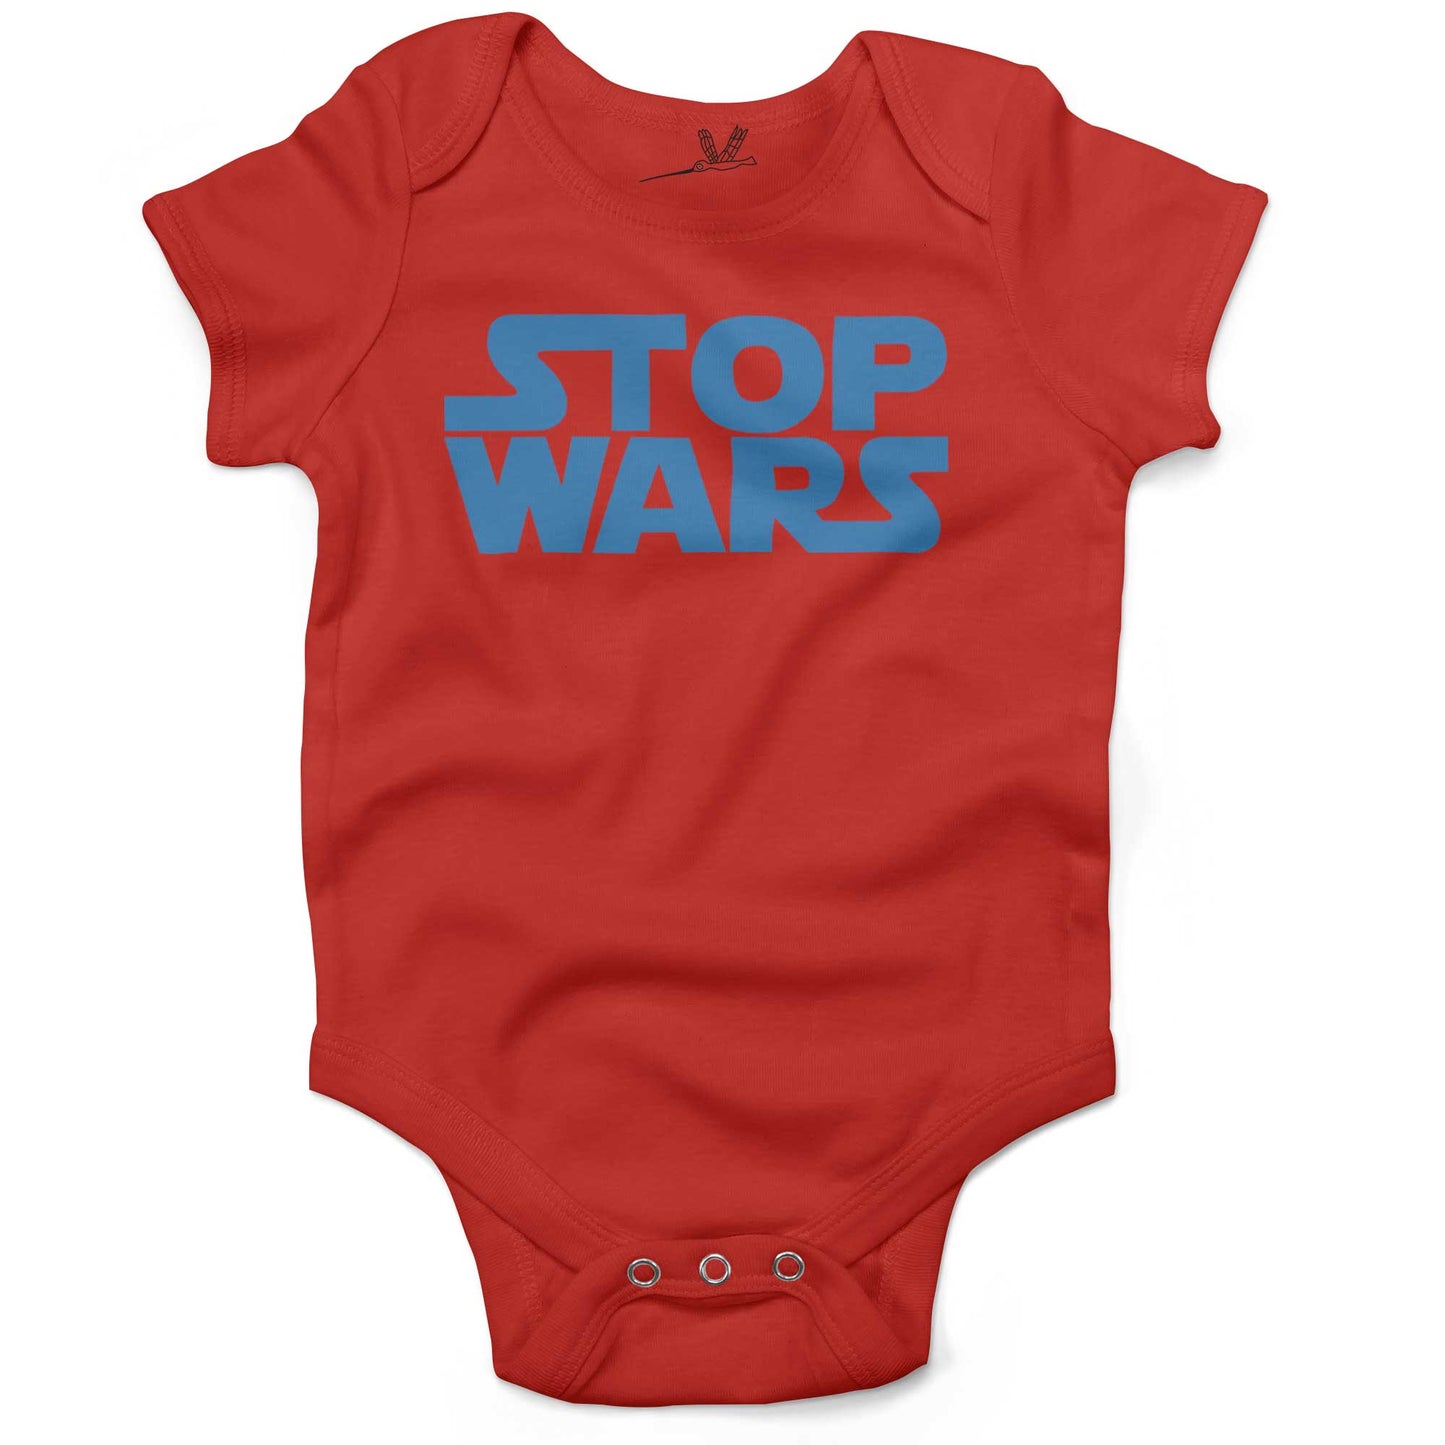 STOP WARS Infant Bodysuit or Raglan Baby Tee-Organic Red-3-6 months